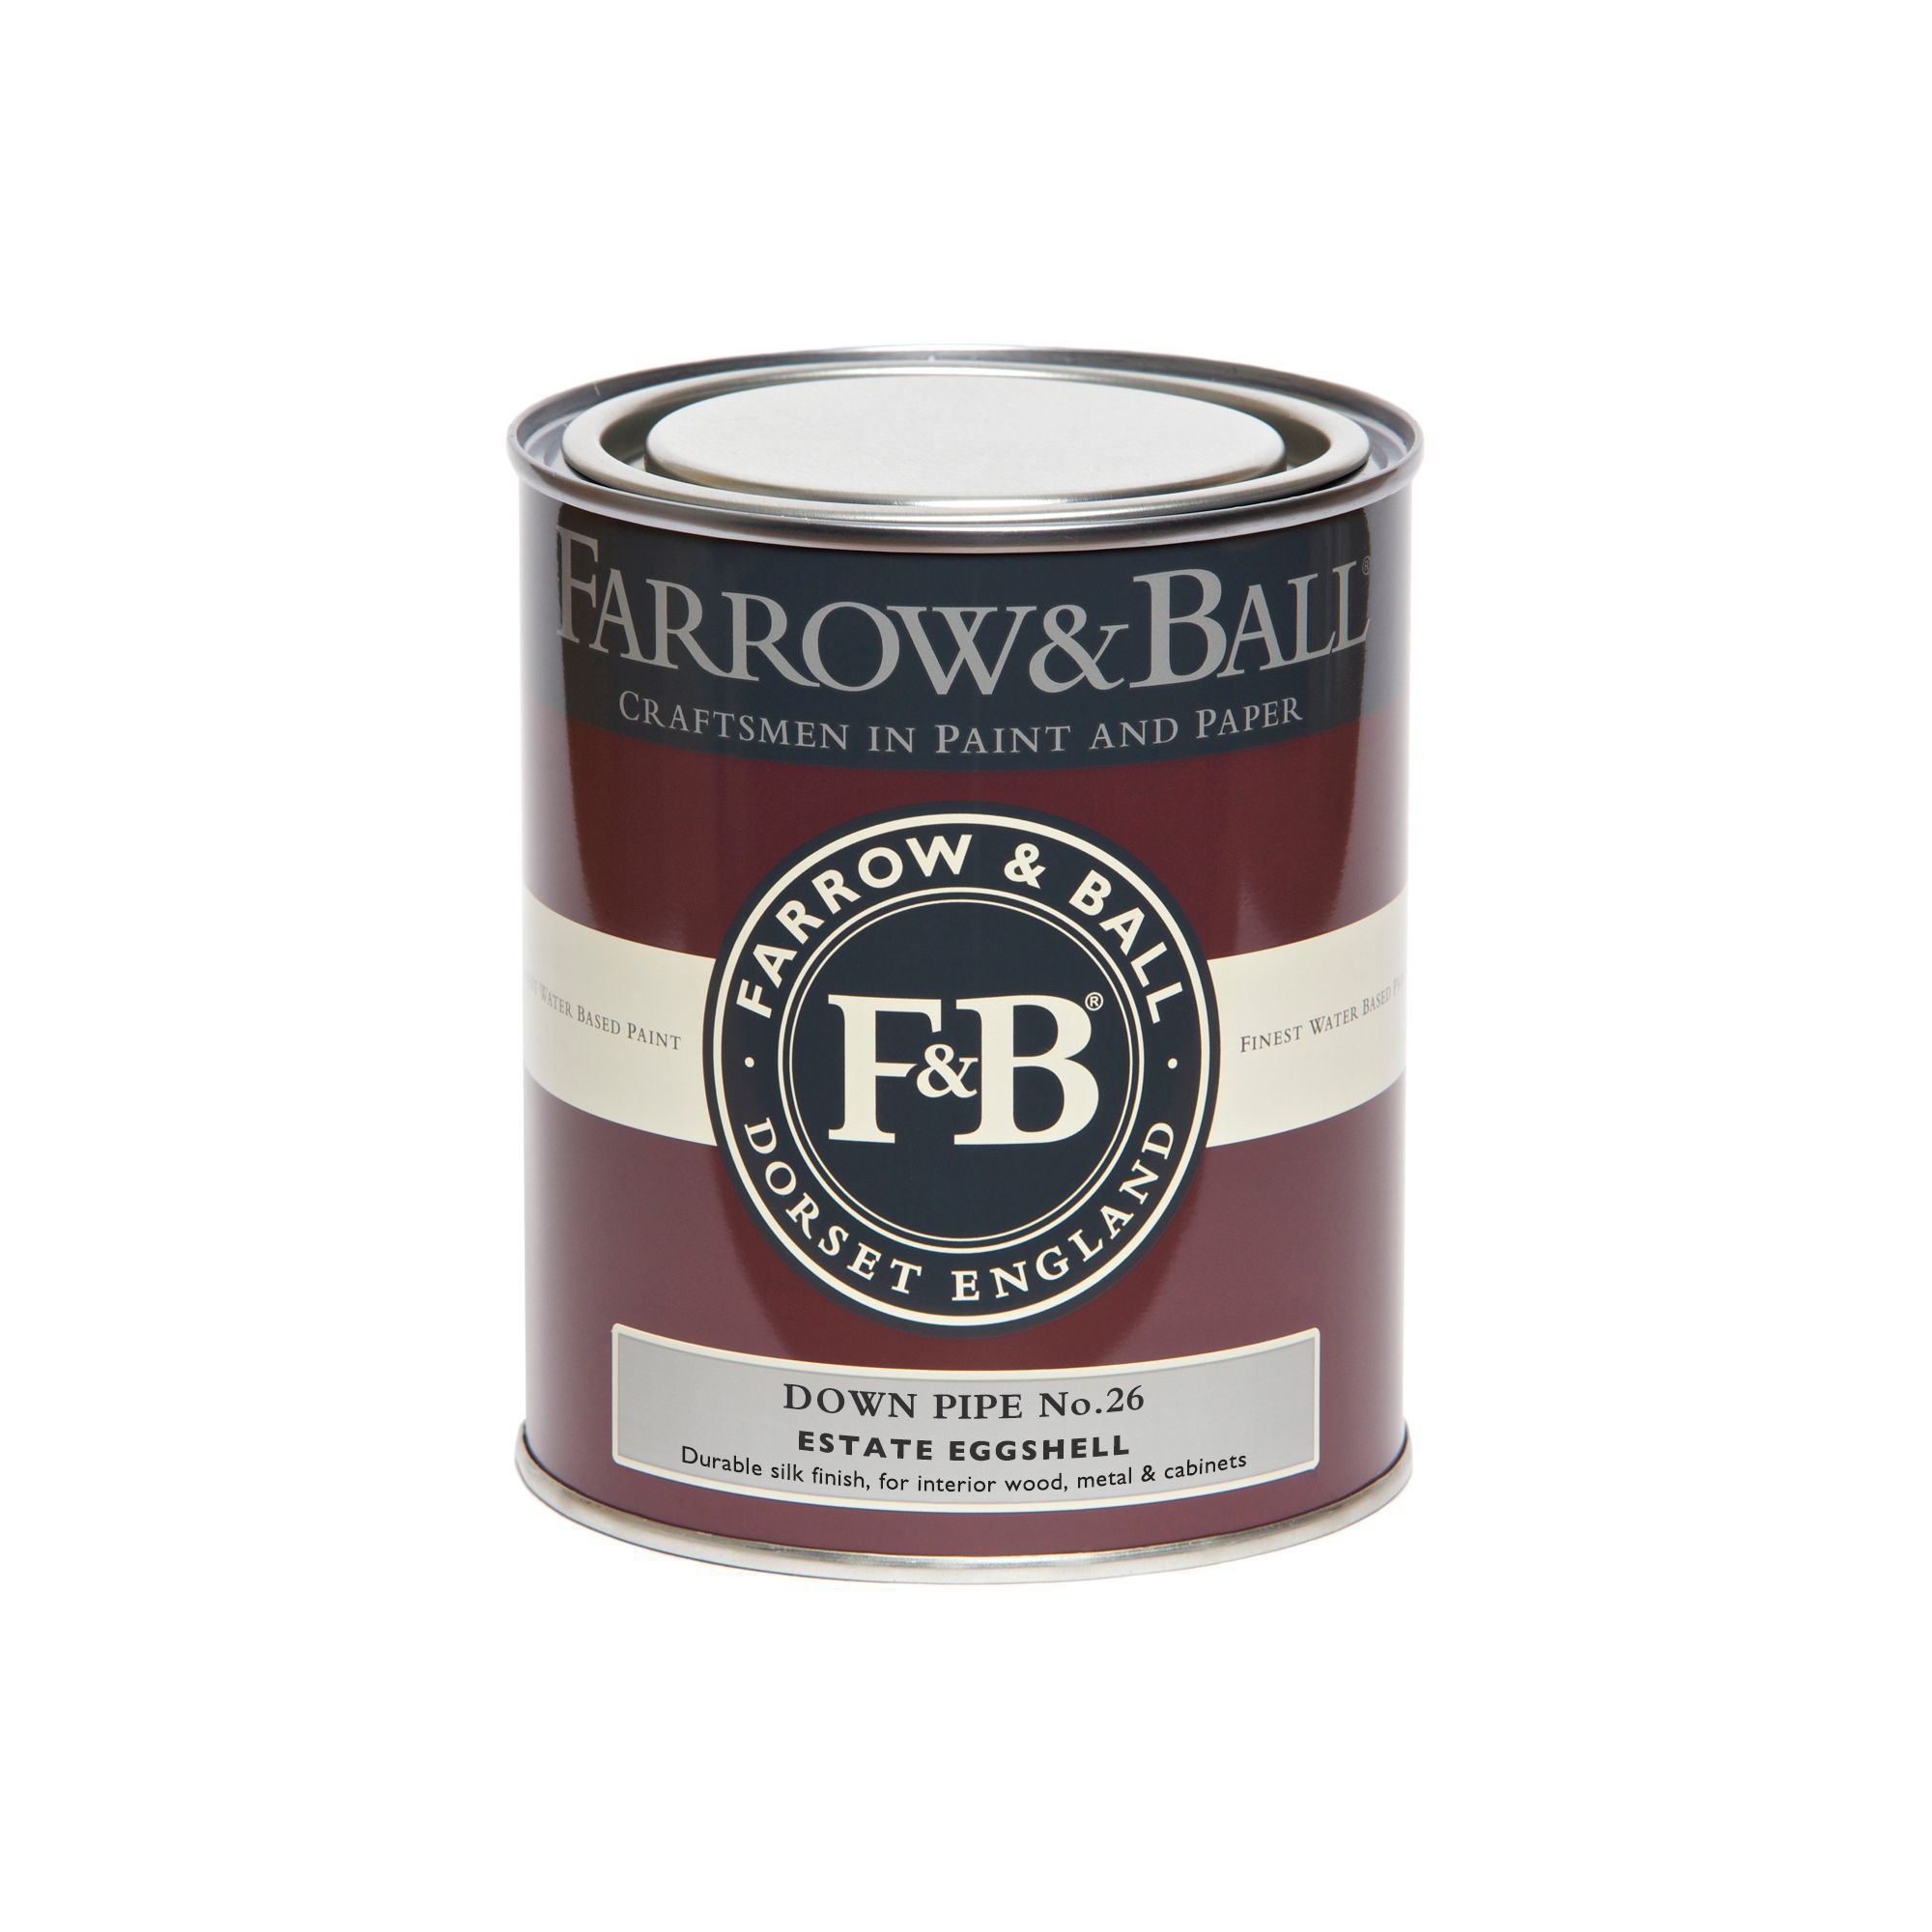 Farrow & Ball Estate Downpipe No.26 Eggshell Metal & wood paint, 750ml